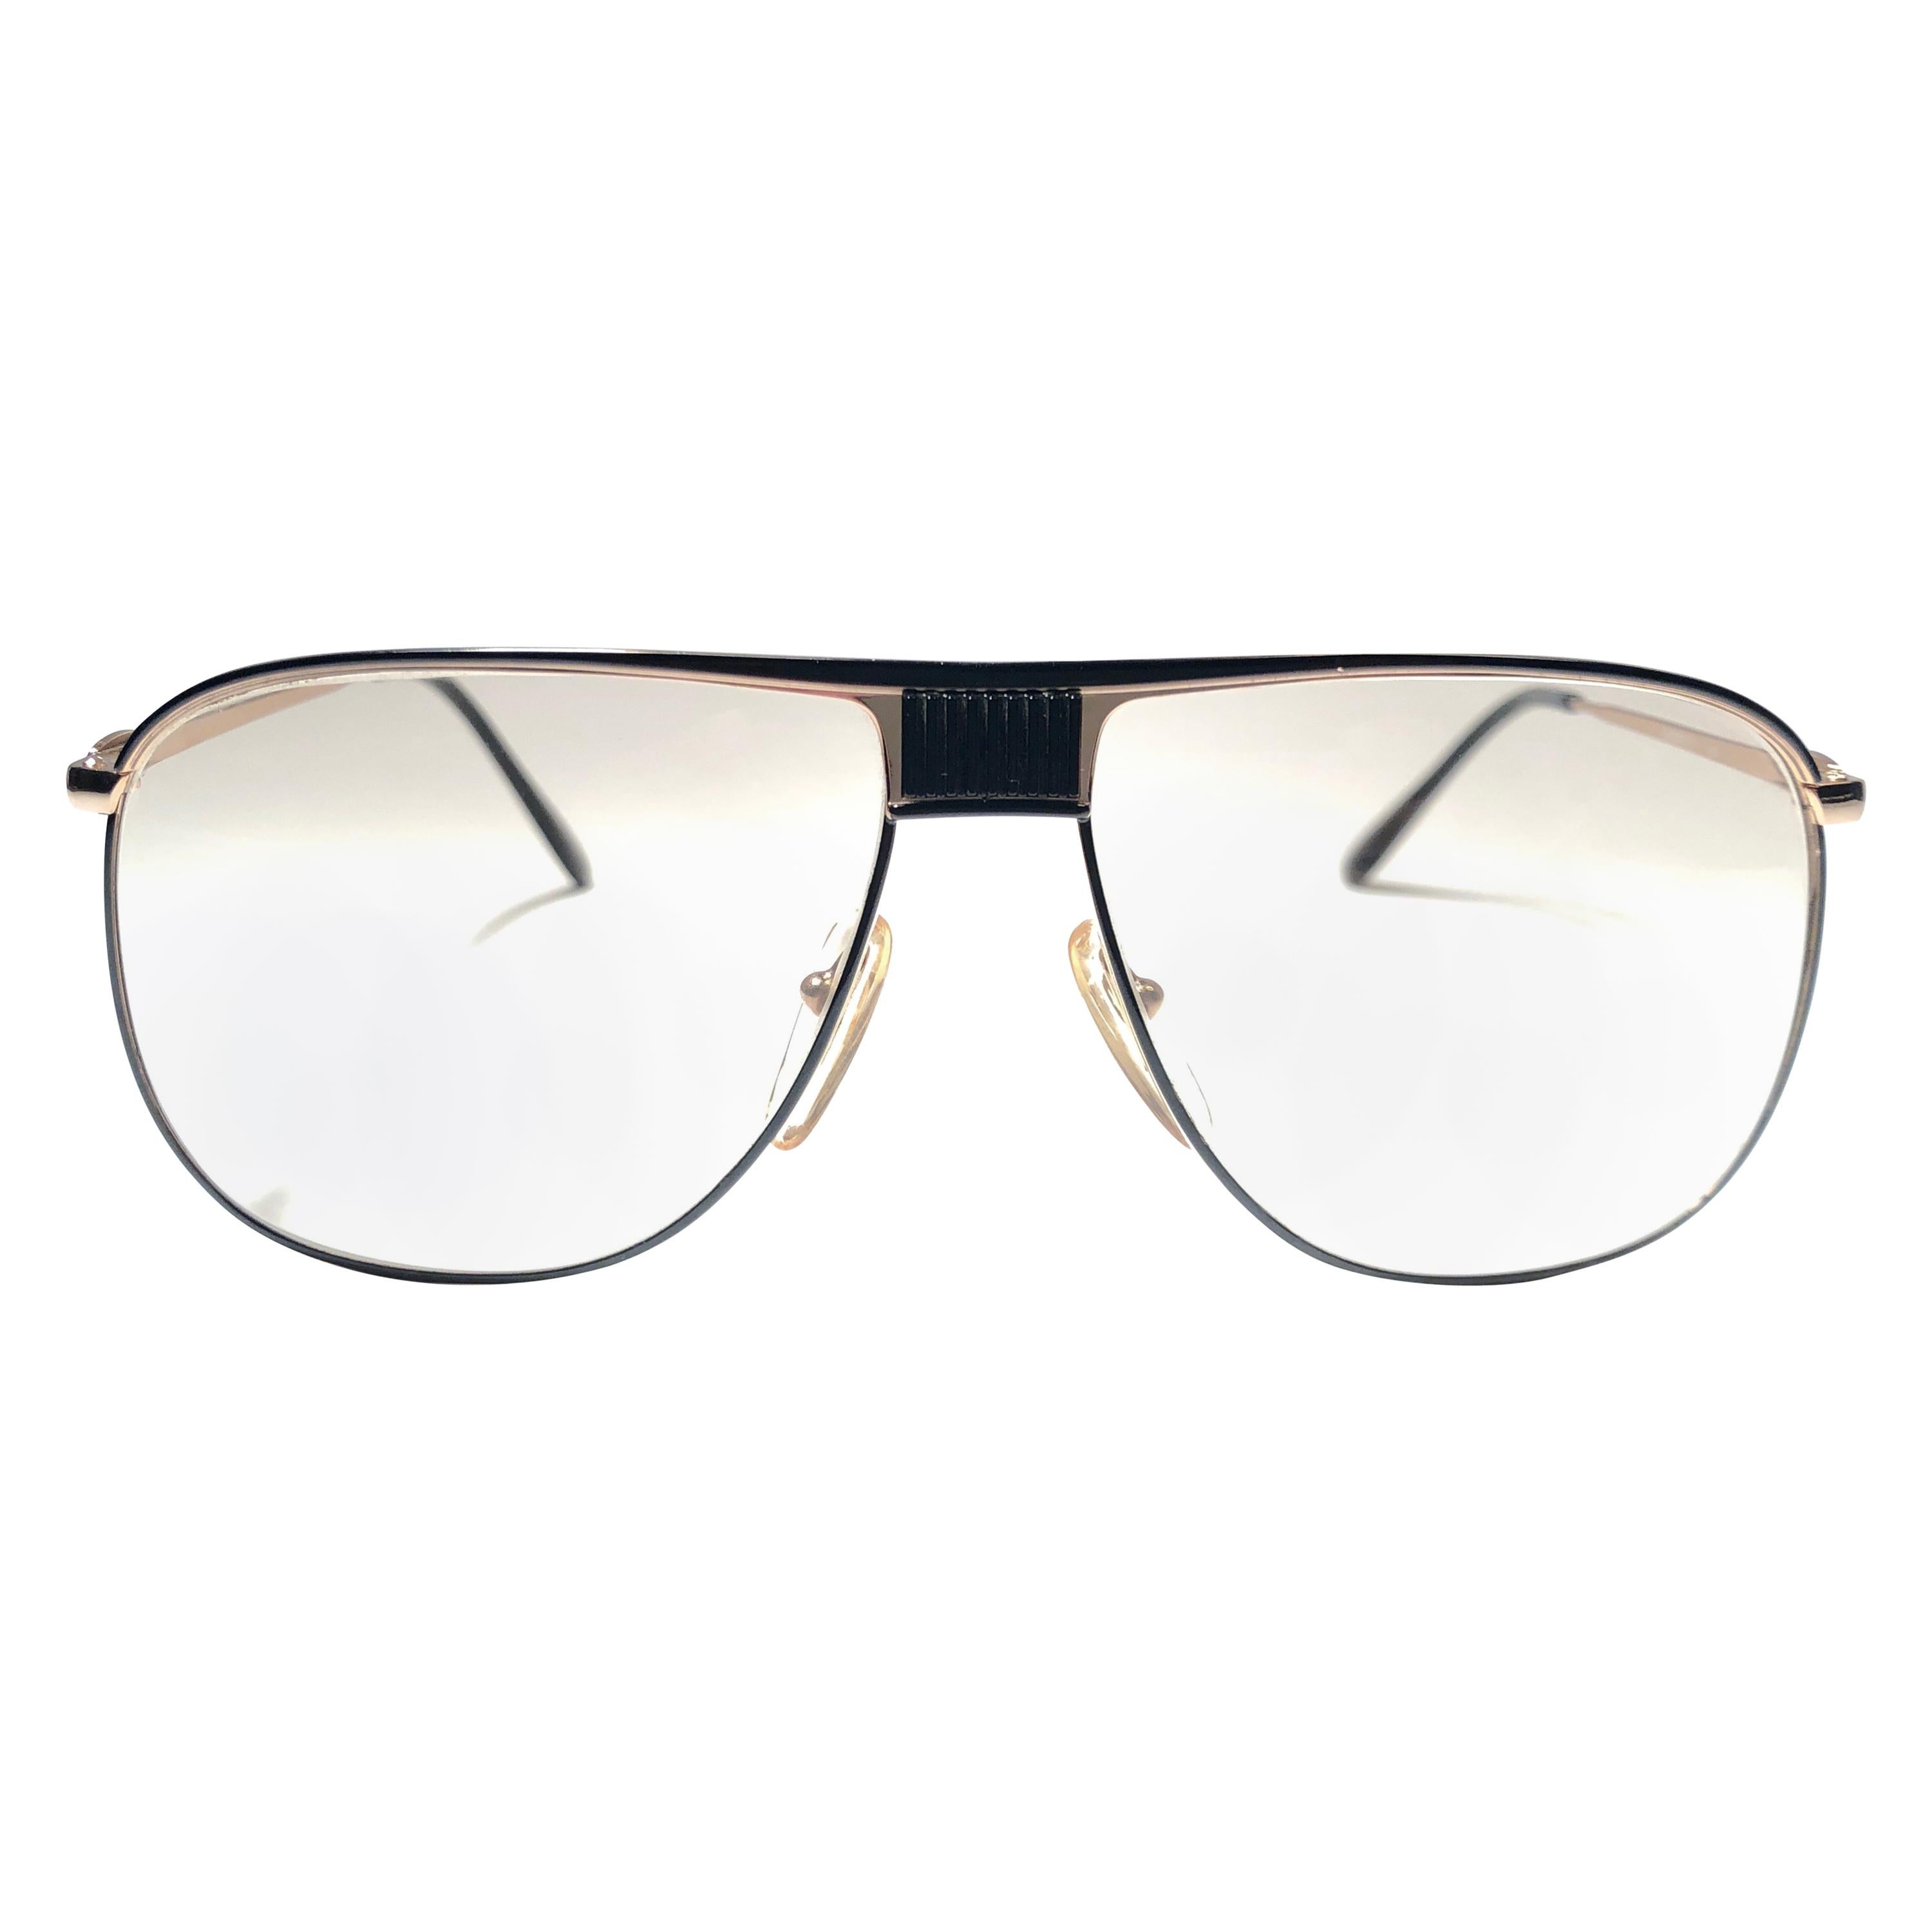 New Vintage Lacoste 171 Oversized Frame Changeable Lenses 1970 Sunglasses